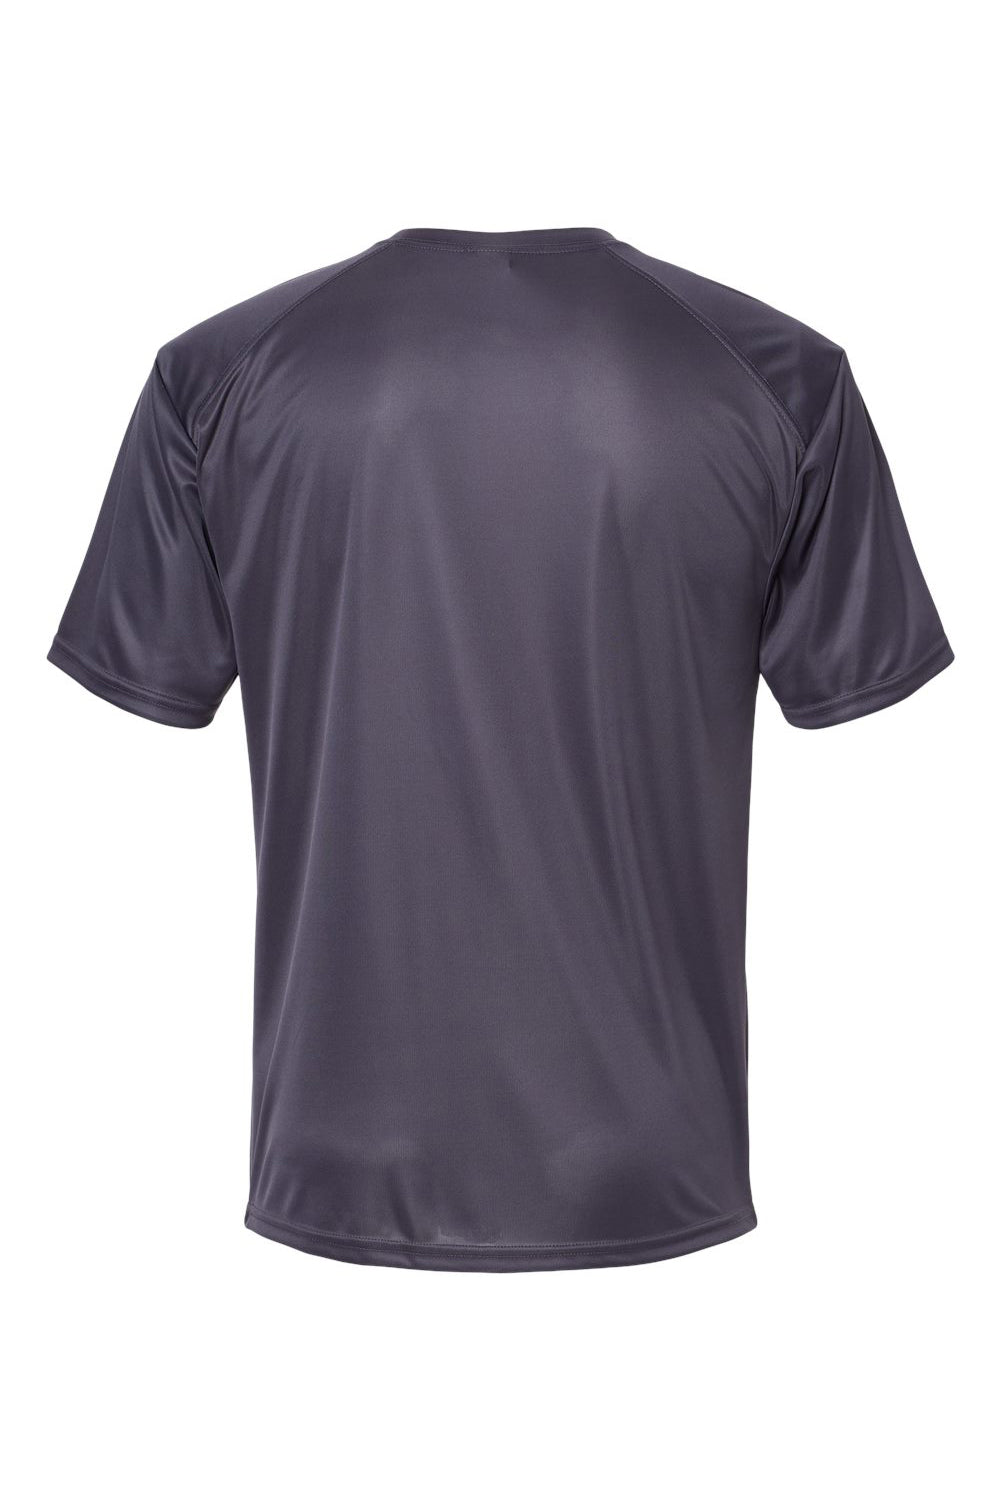 Paragon 200 Mens Islander Performance Short Sleeve Crewneck T-Shirt Graphite Grey Flat Back